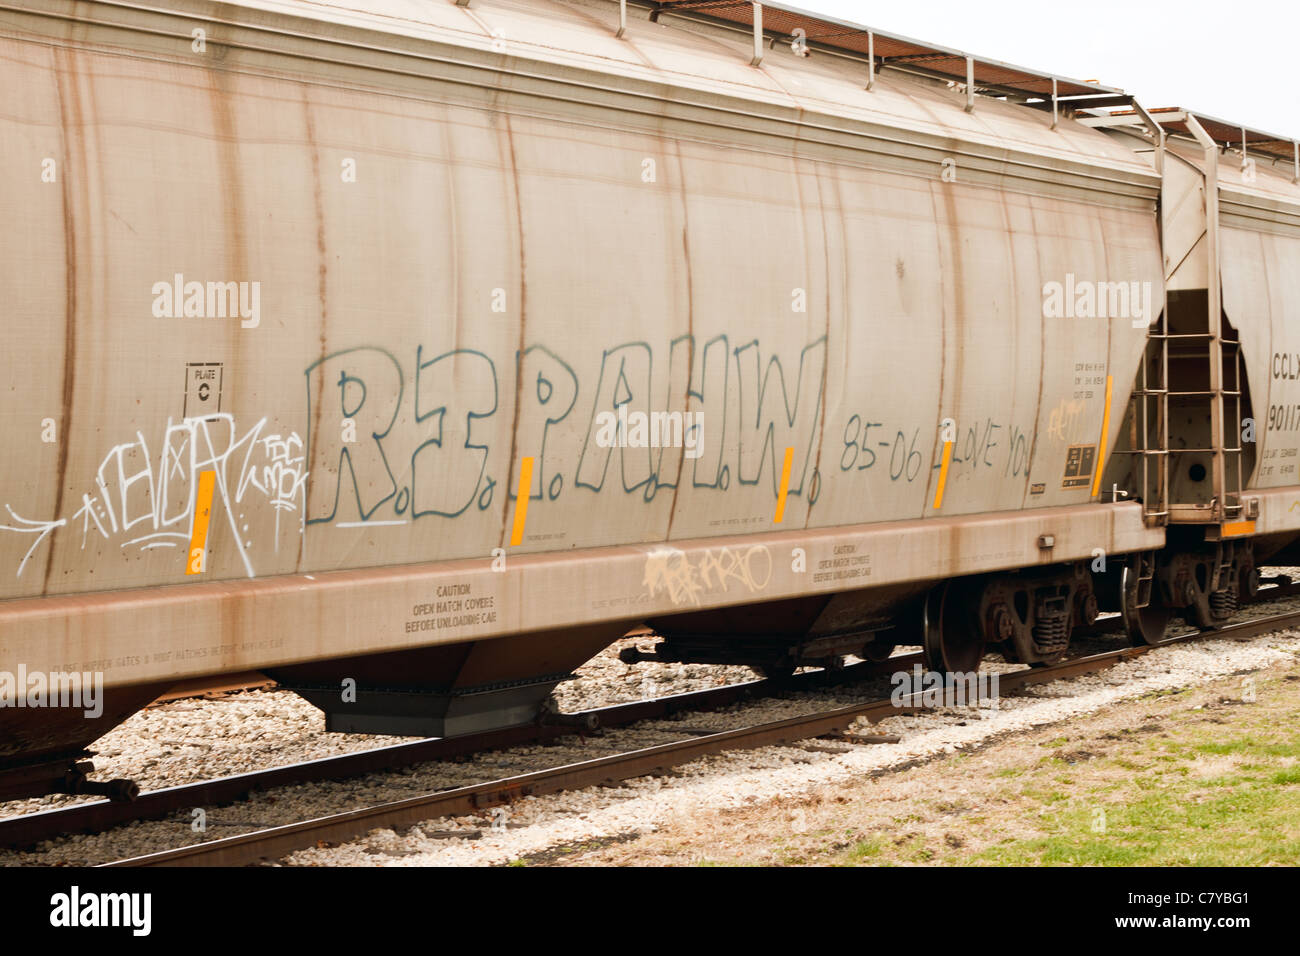 Uncolored graffiti on side of train cart Stock Photo